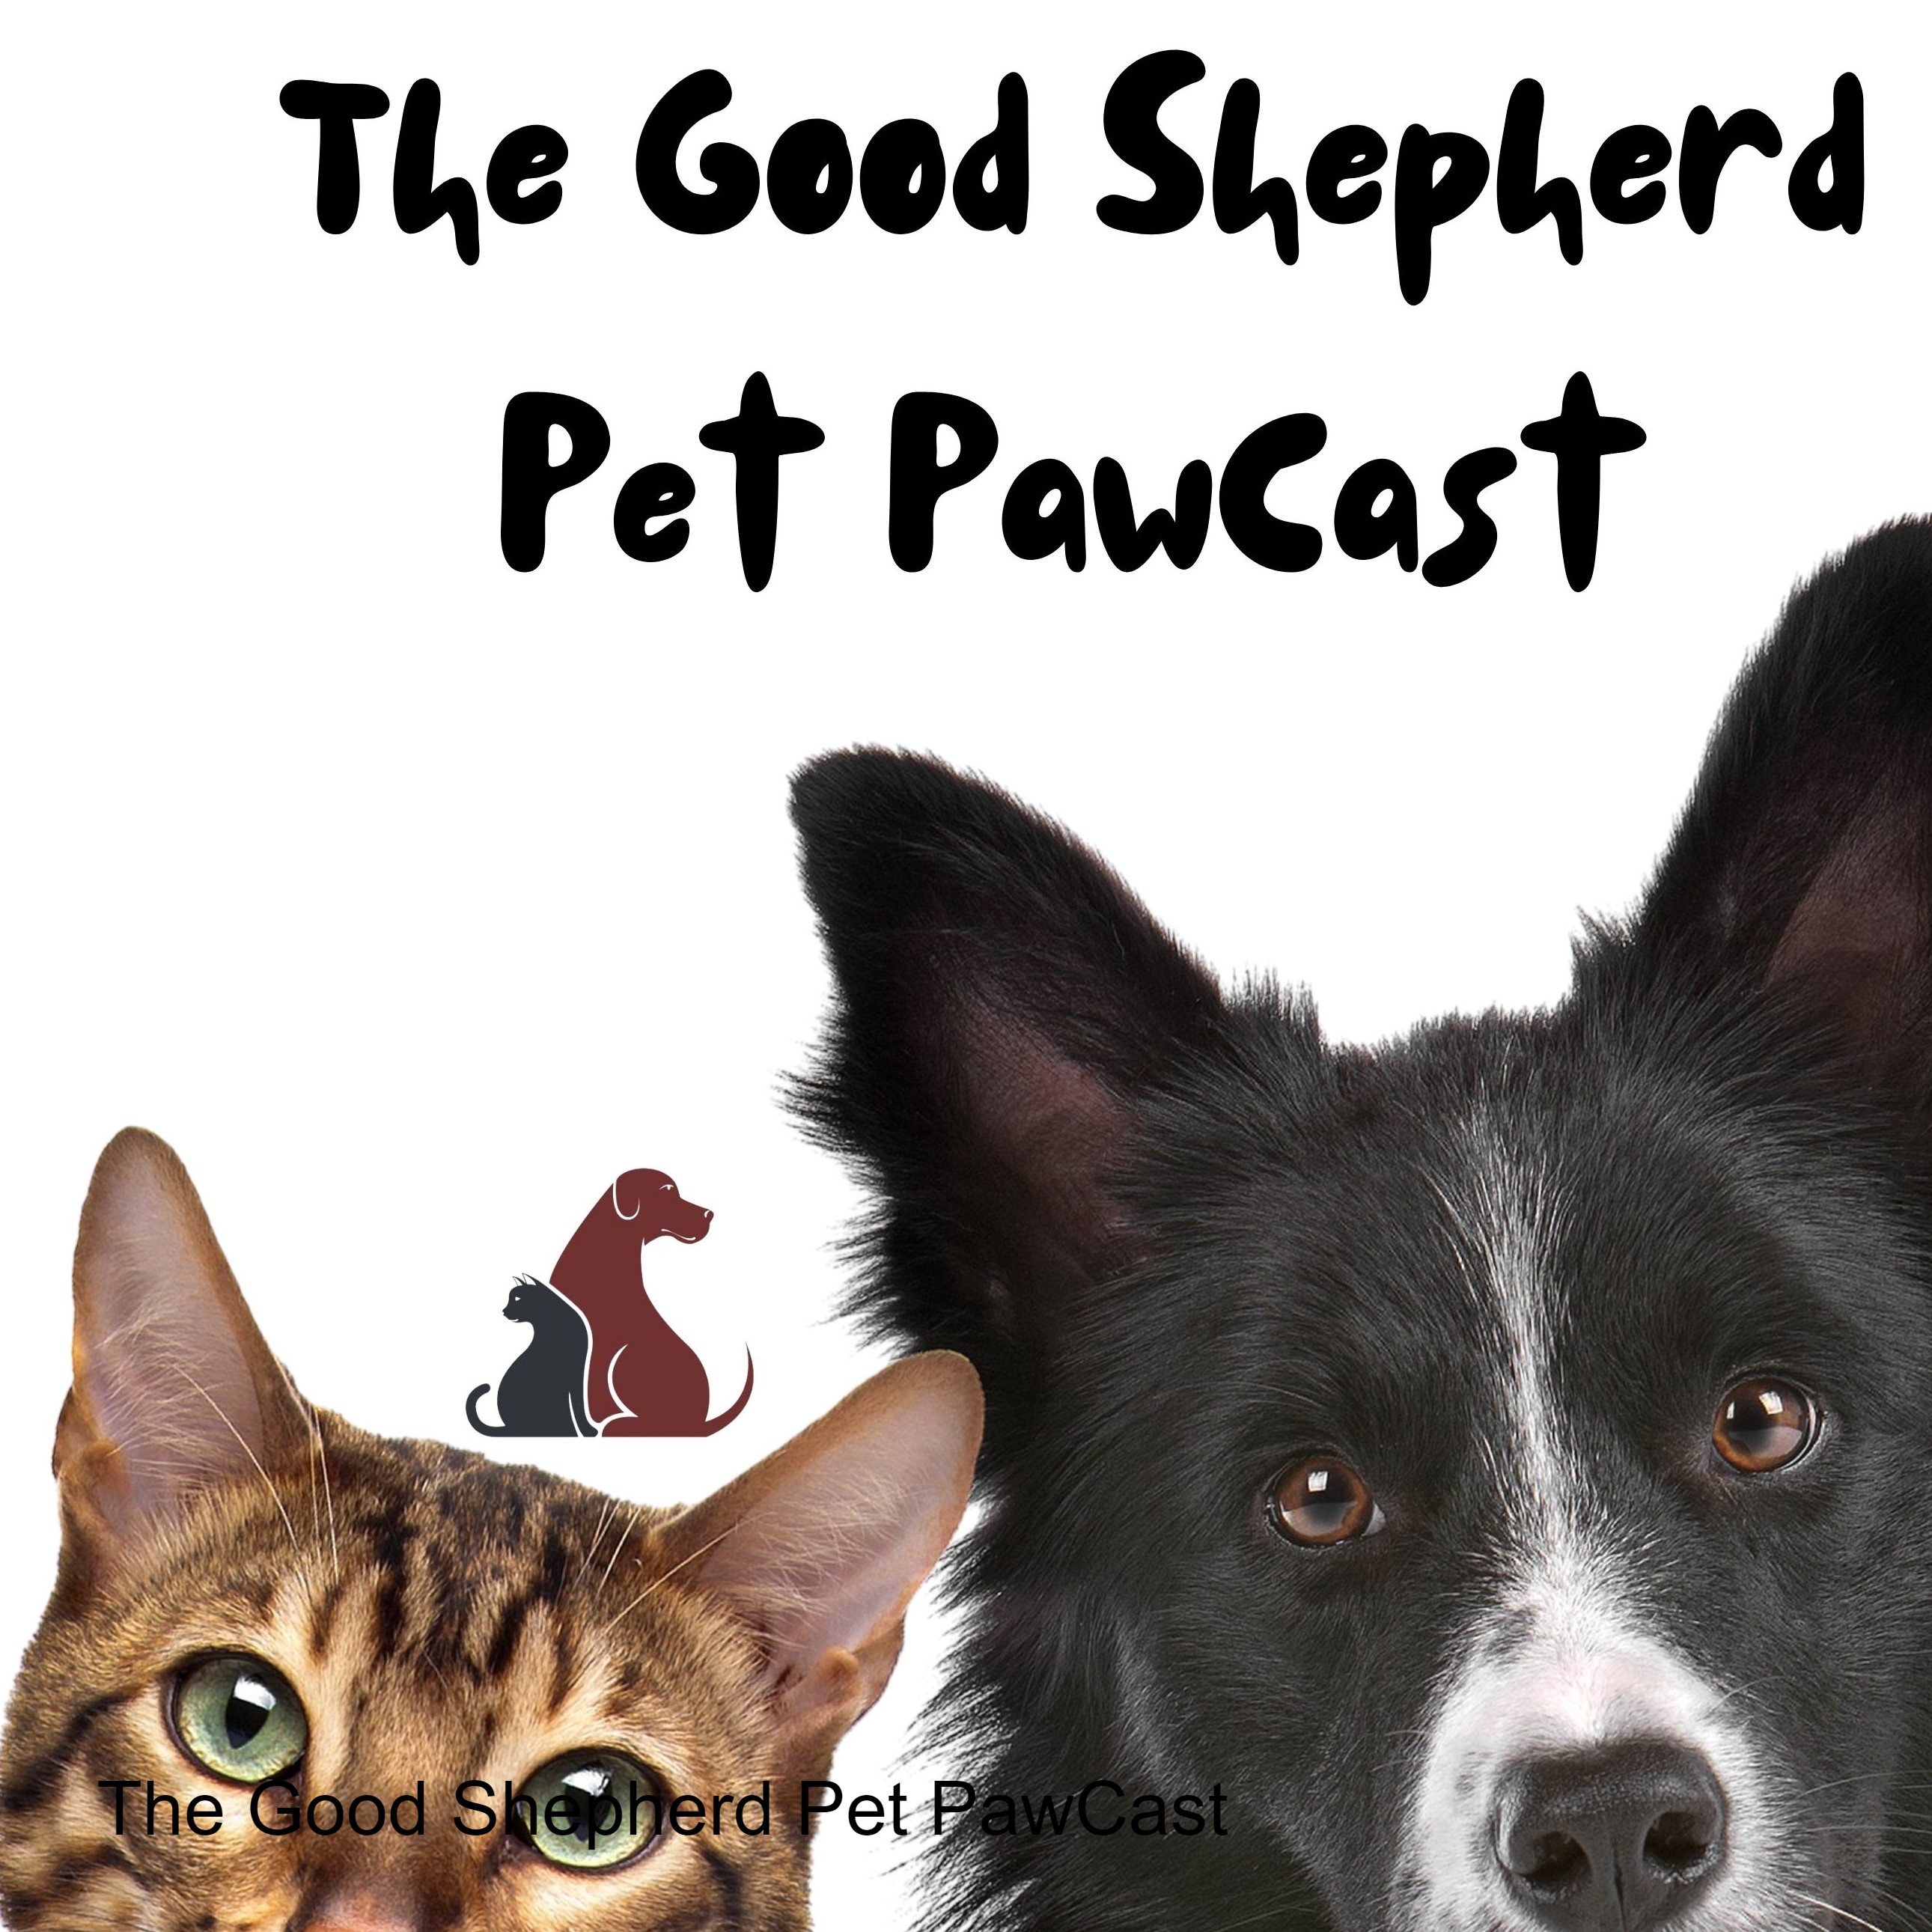 The Good Shepherd Pet PawCast